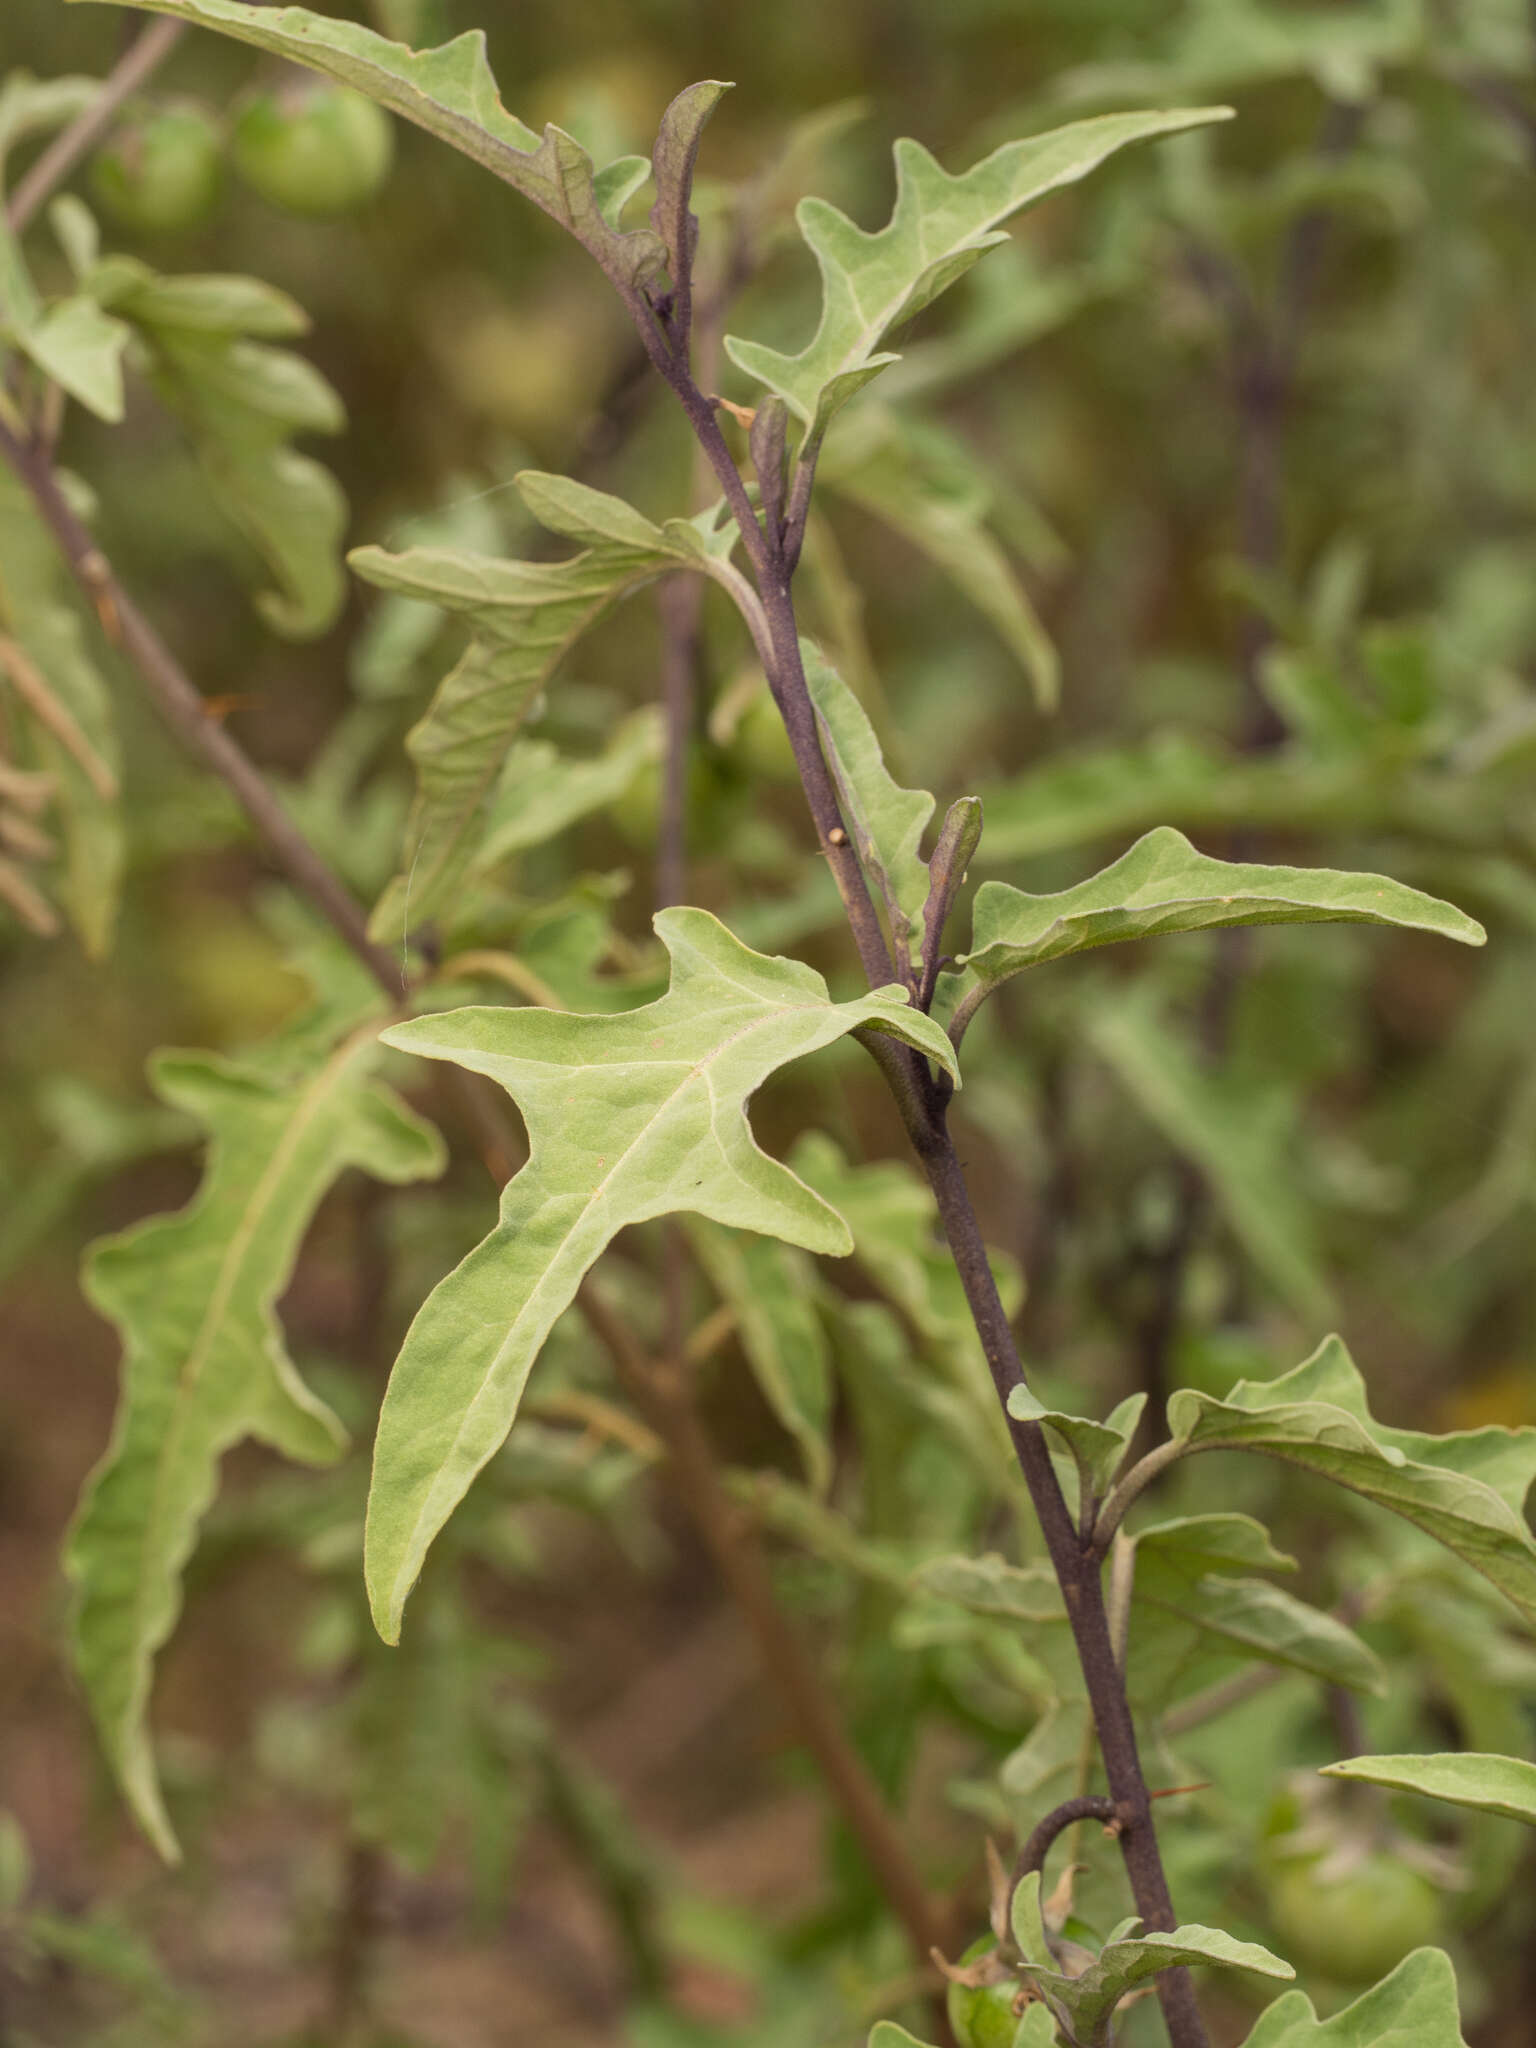 Image of Solanum armourense A. R. Bean